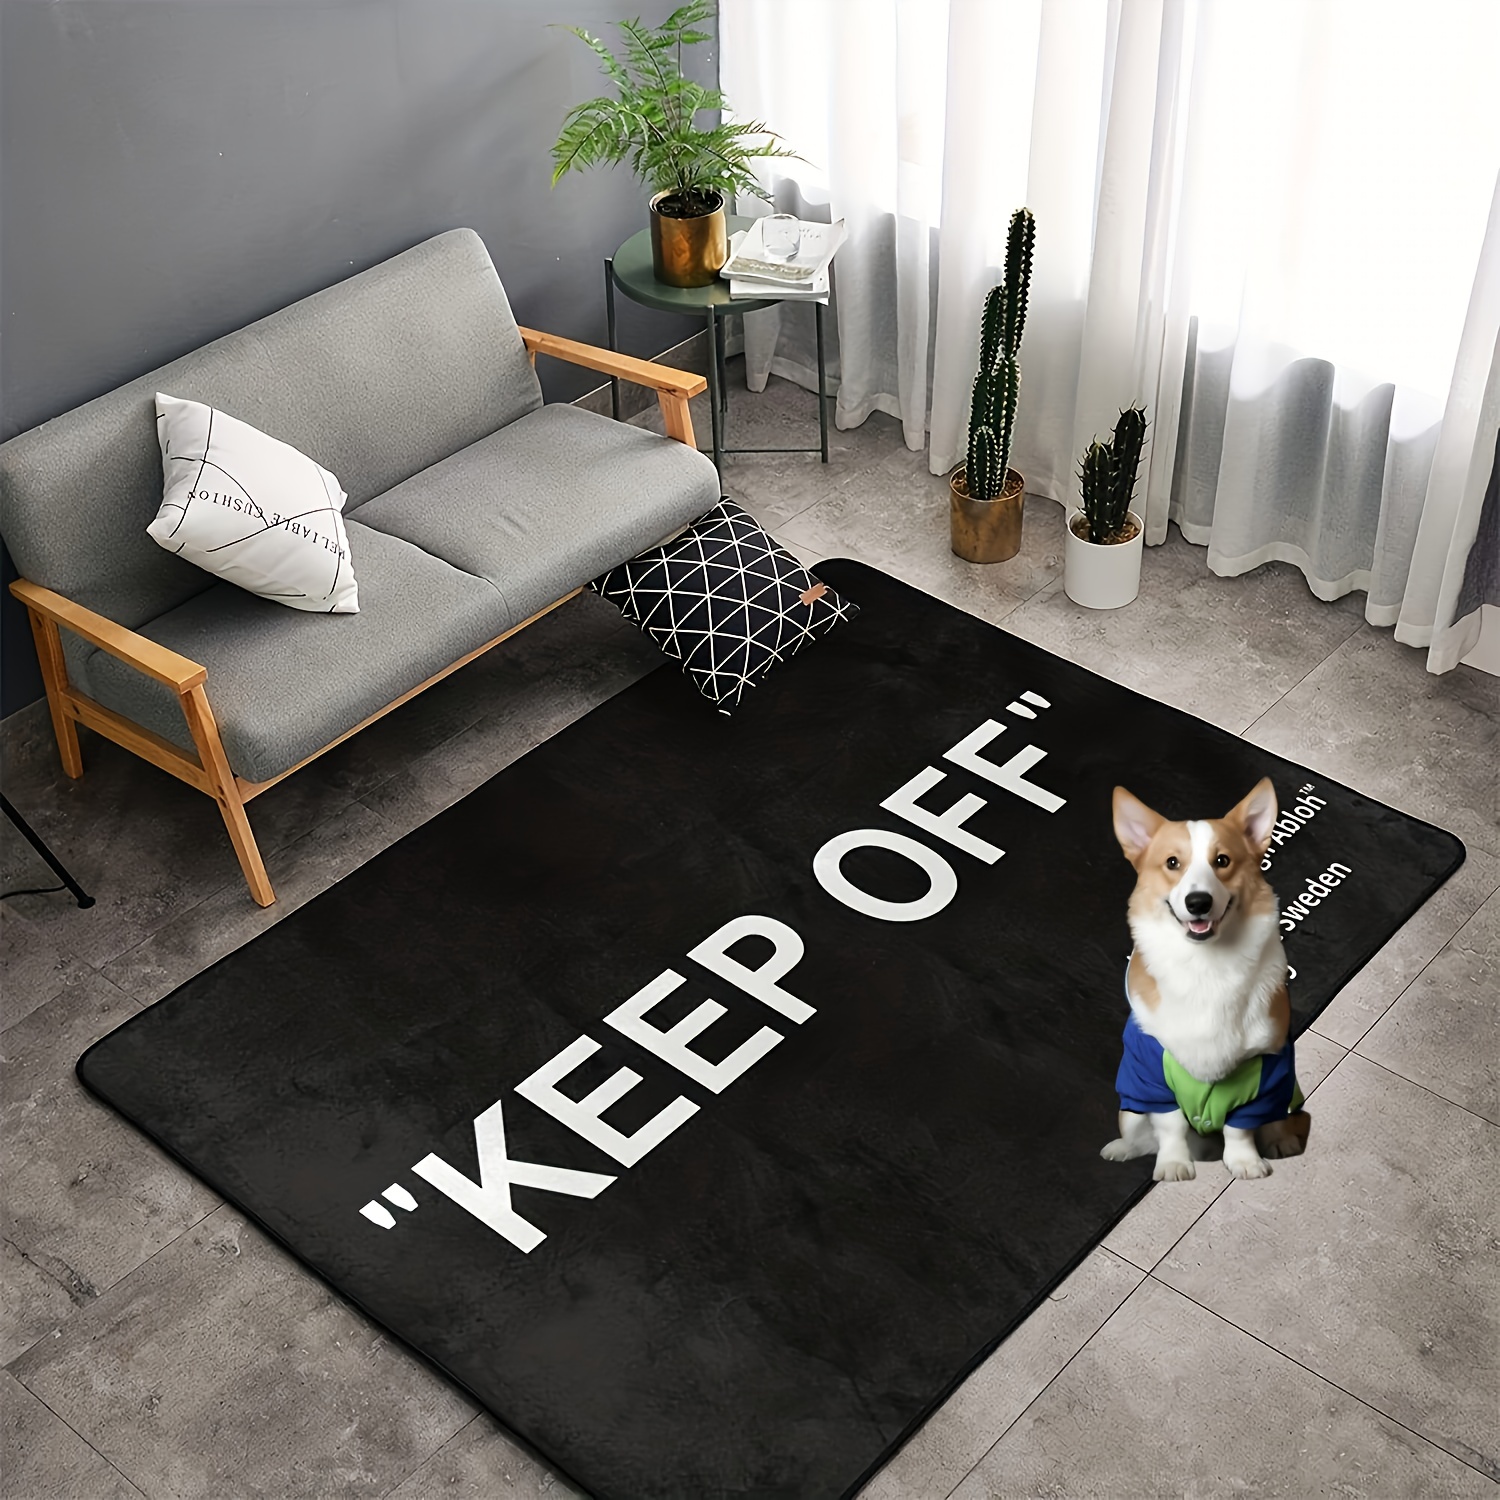 KEEP OFF Rug, Area Rug, Non Slip Floor Carpet, Teen's Carpet